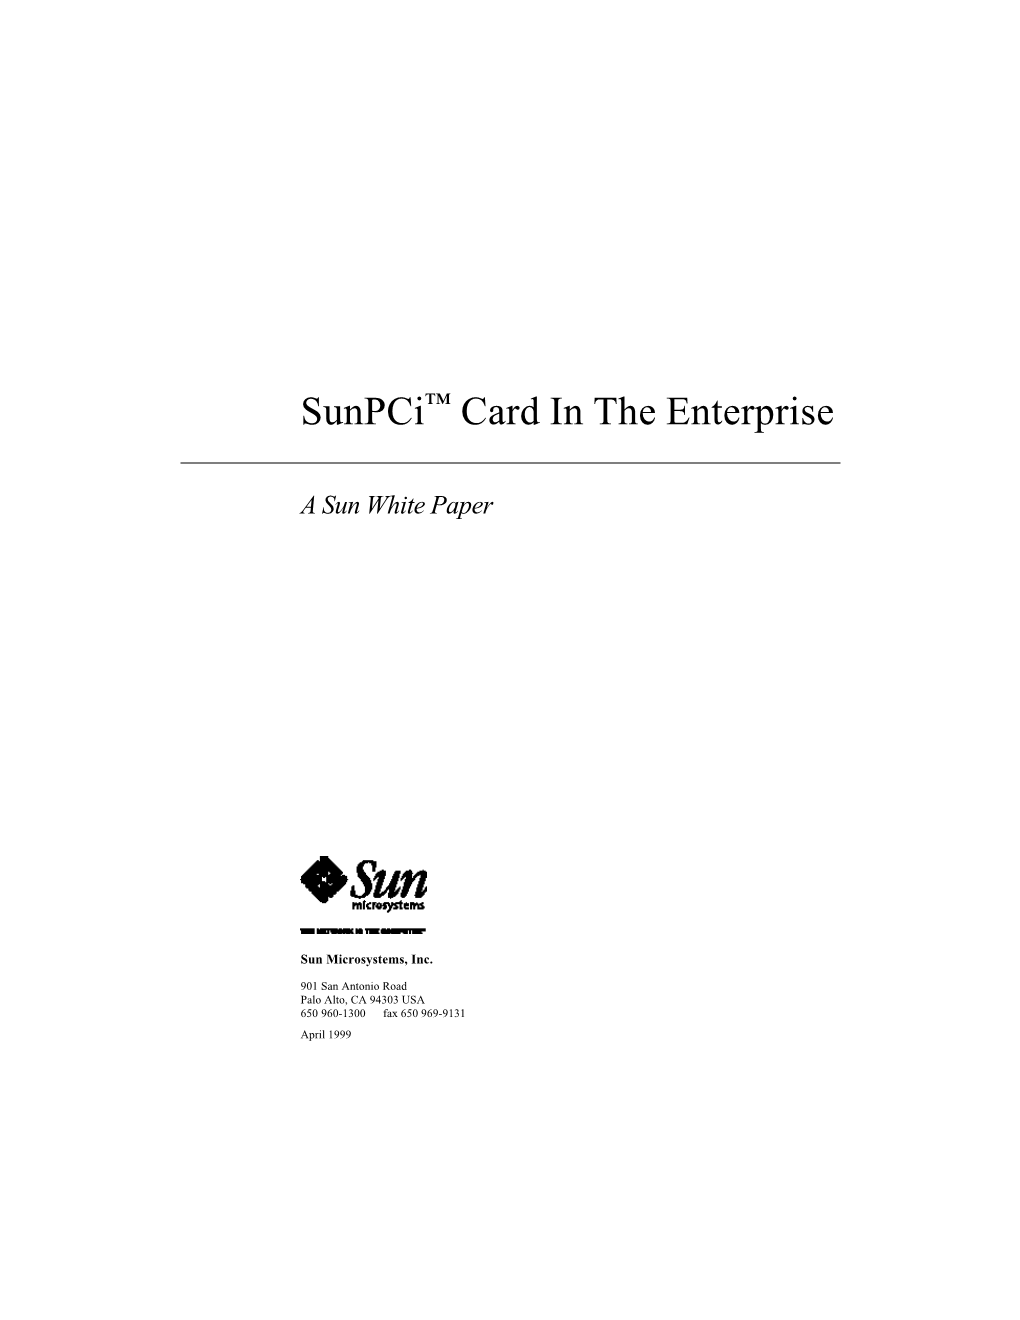 Sunpci Card in the Enterprise